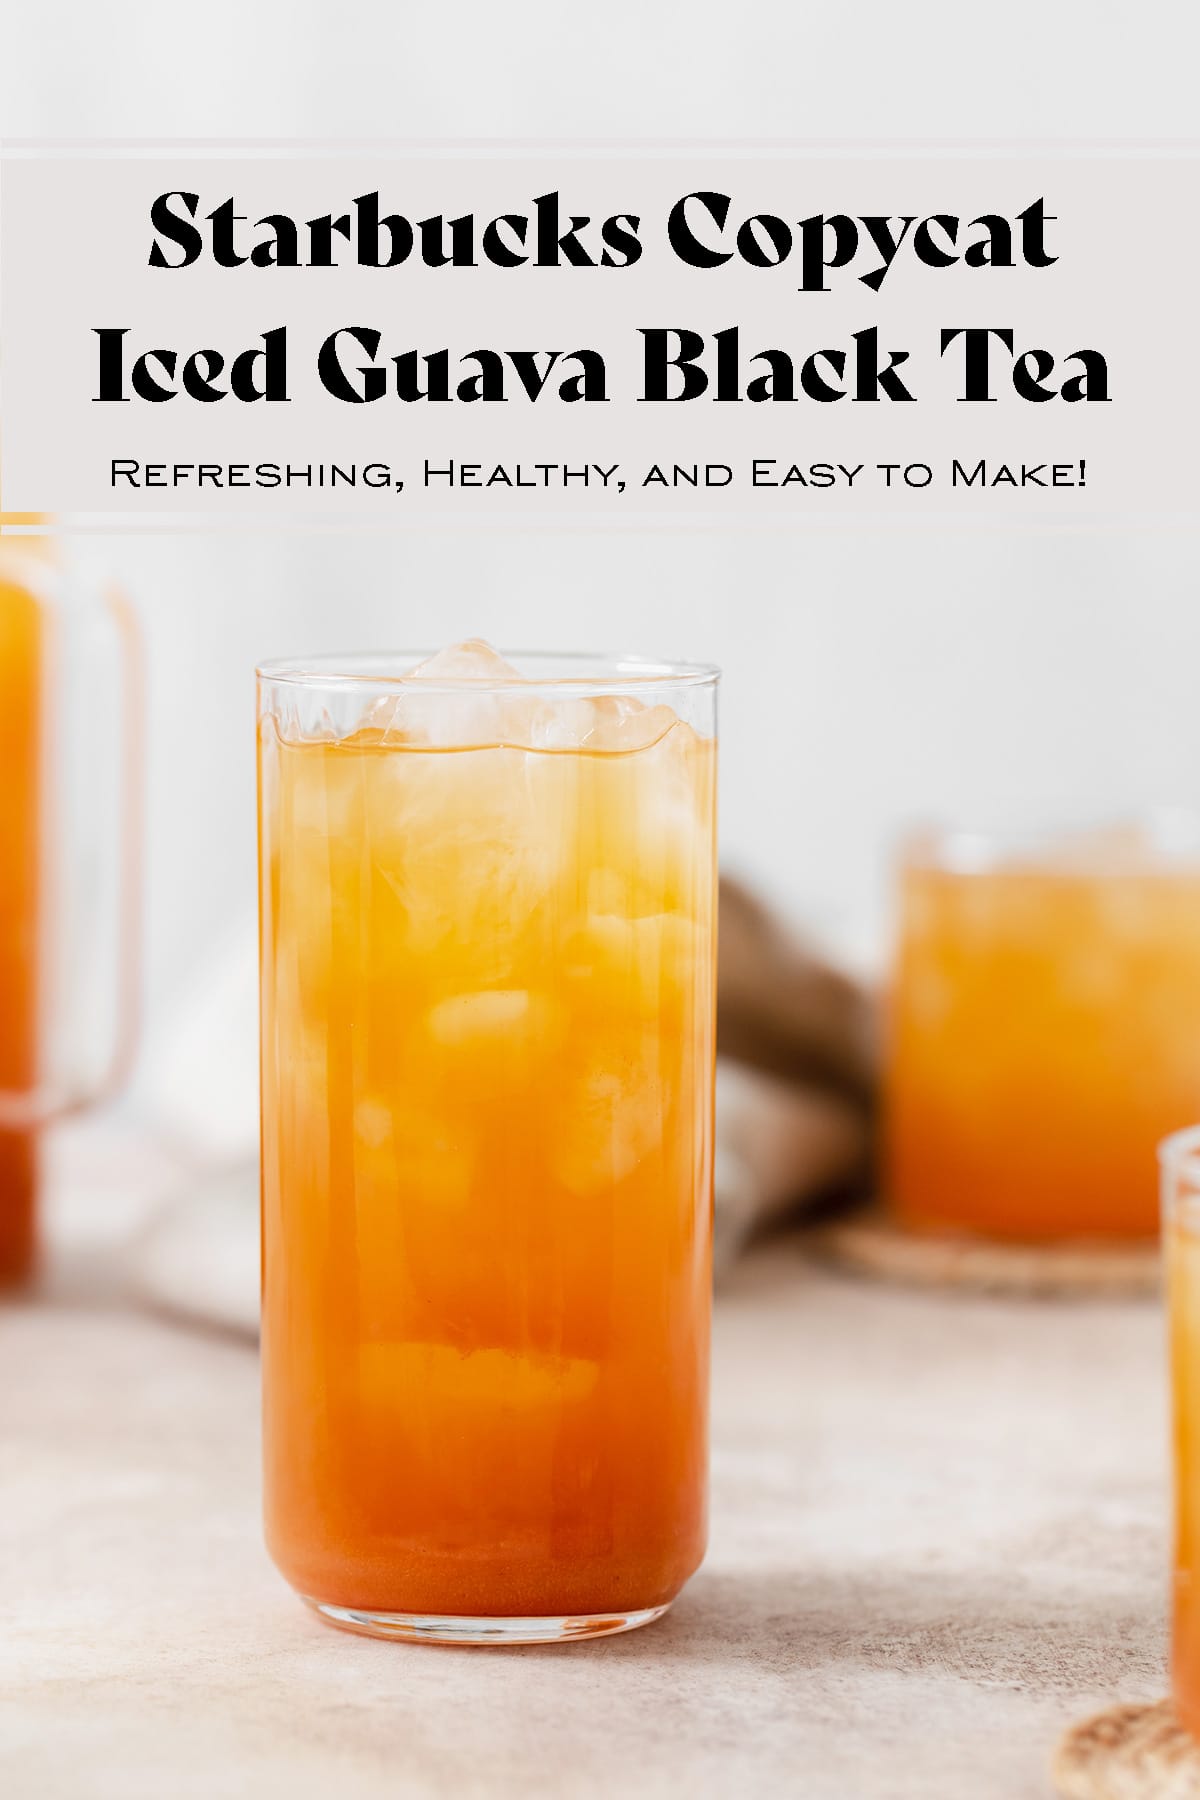 Iced Guava Black Tea